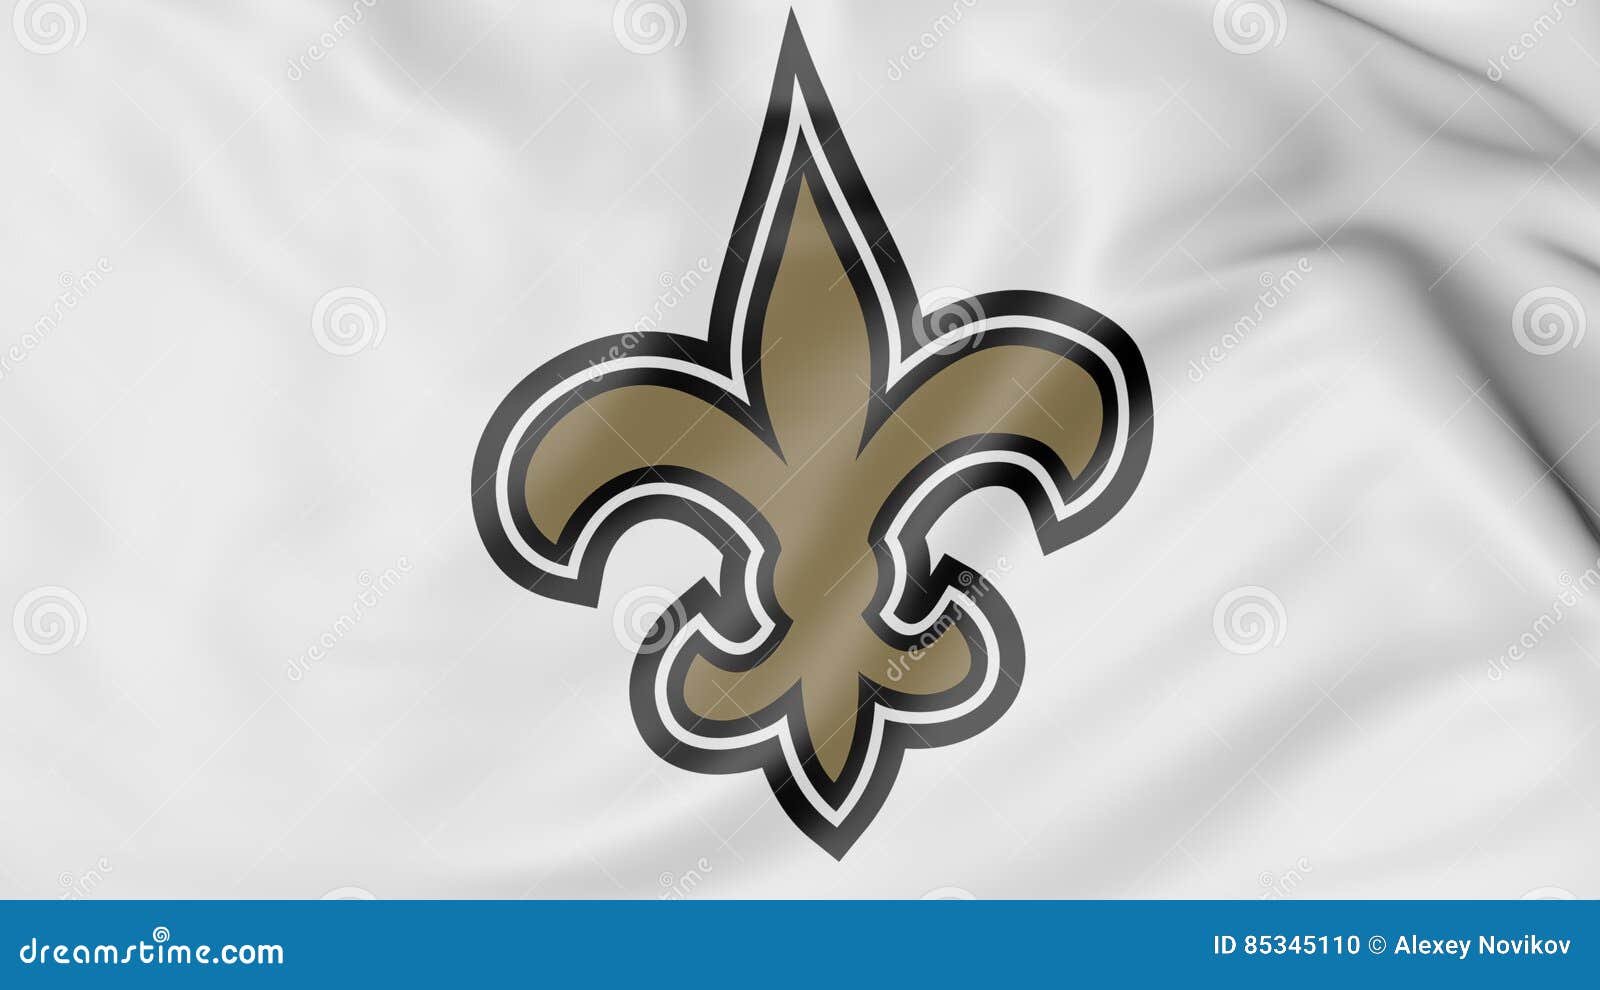 New Orleans Saints Logo Vector Illustration | CartoonDealer.com #136003728